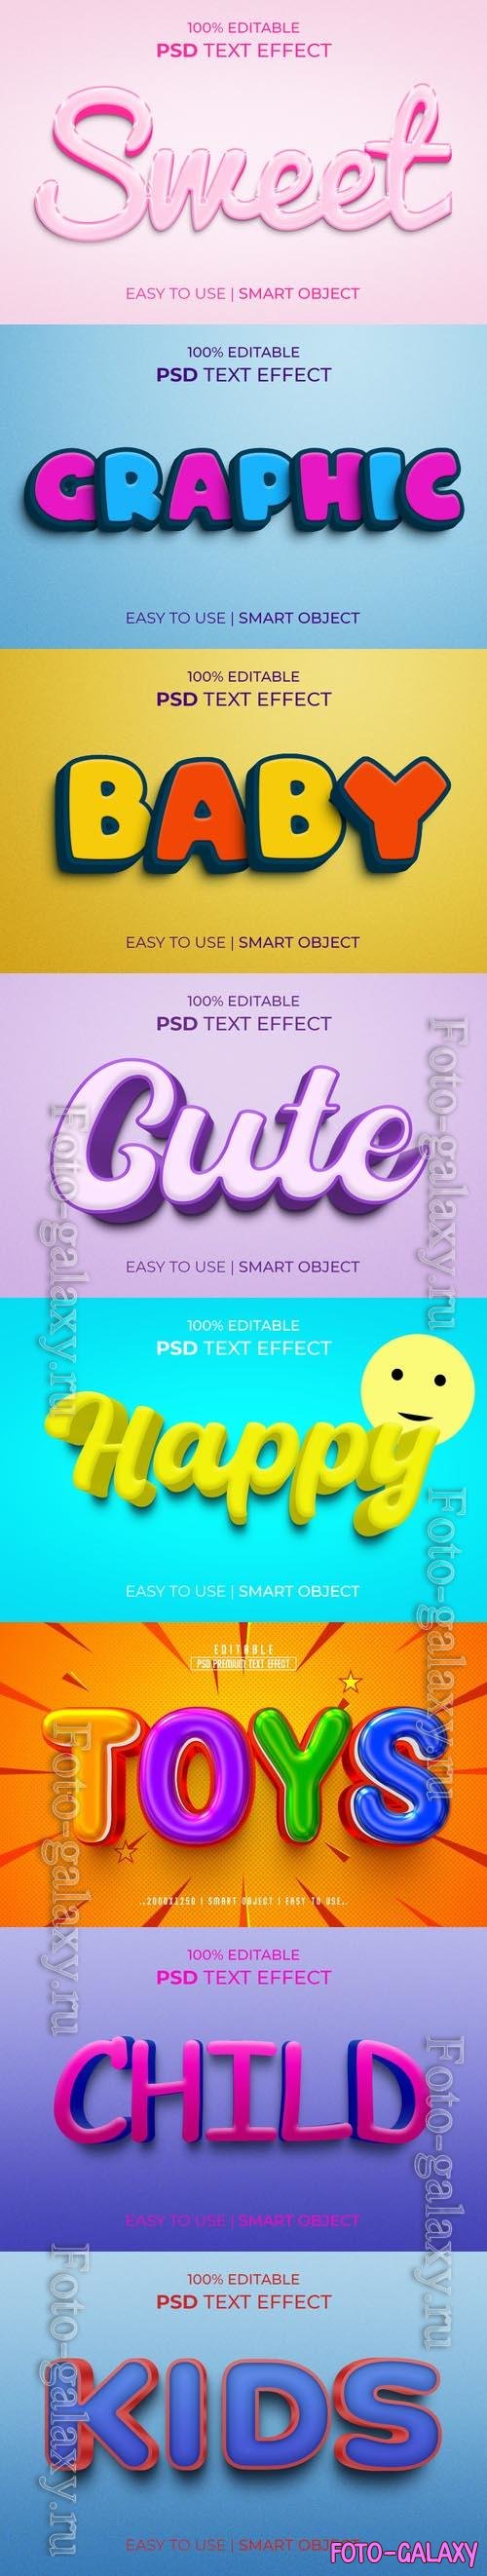 8 Psd style text effect editable set vol 31